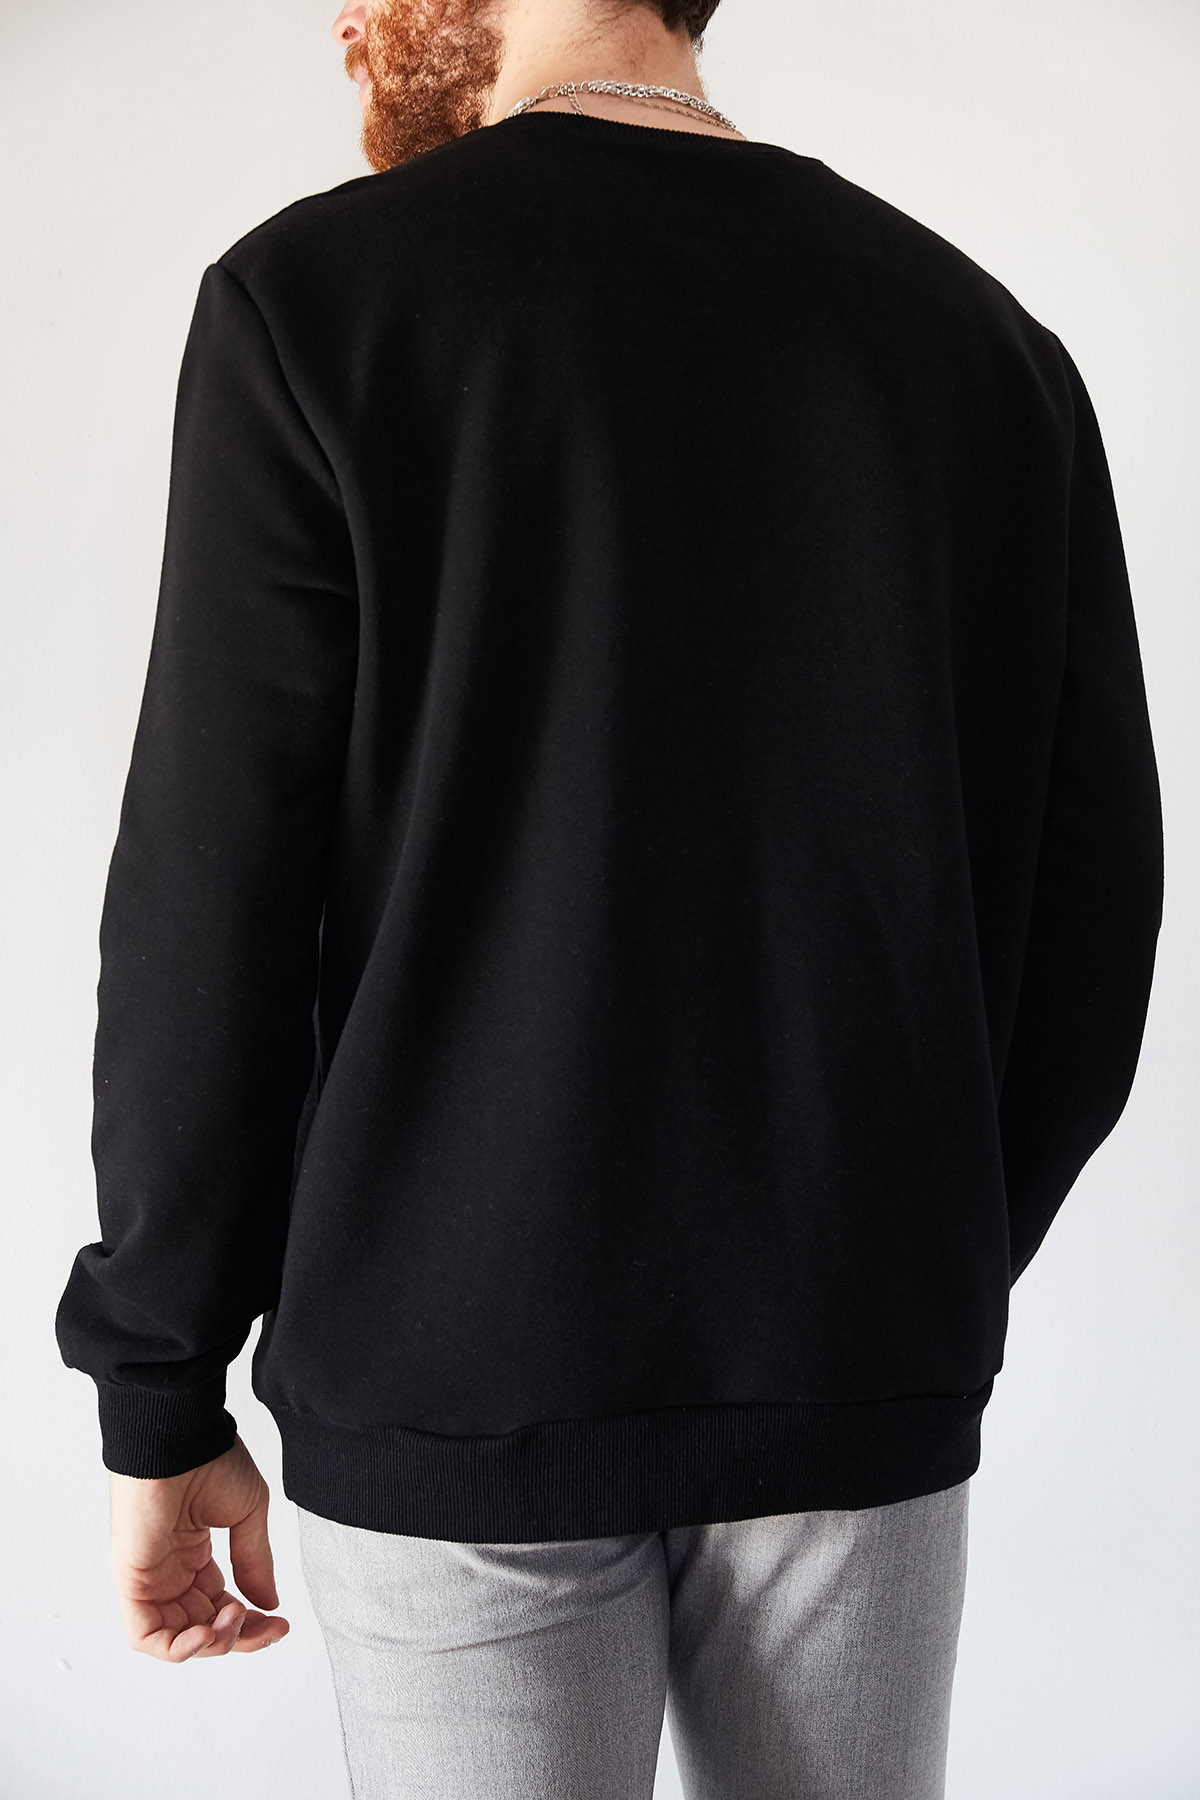 Siyah Brooklyn Baskılı Sweatshirt 1KXE8-44229-02 - 2